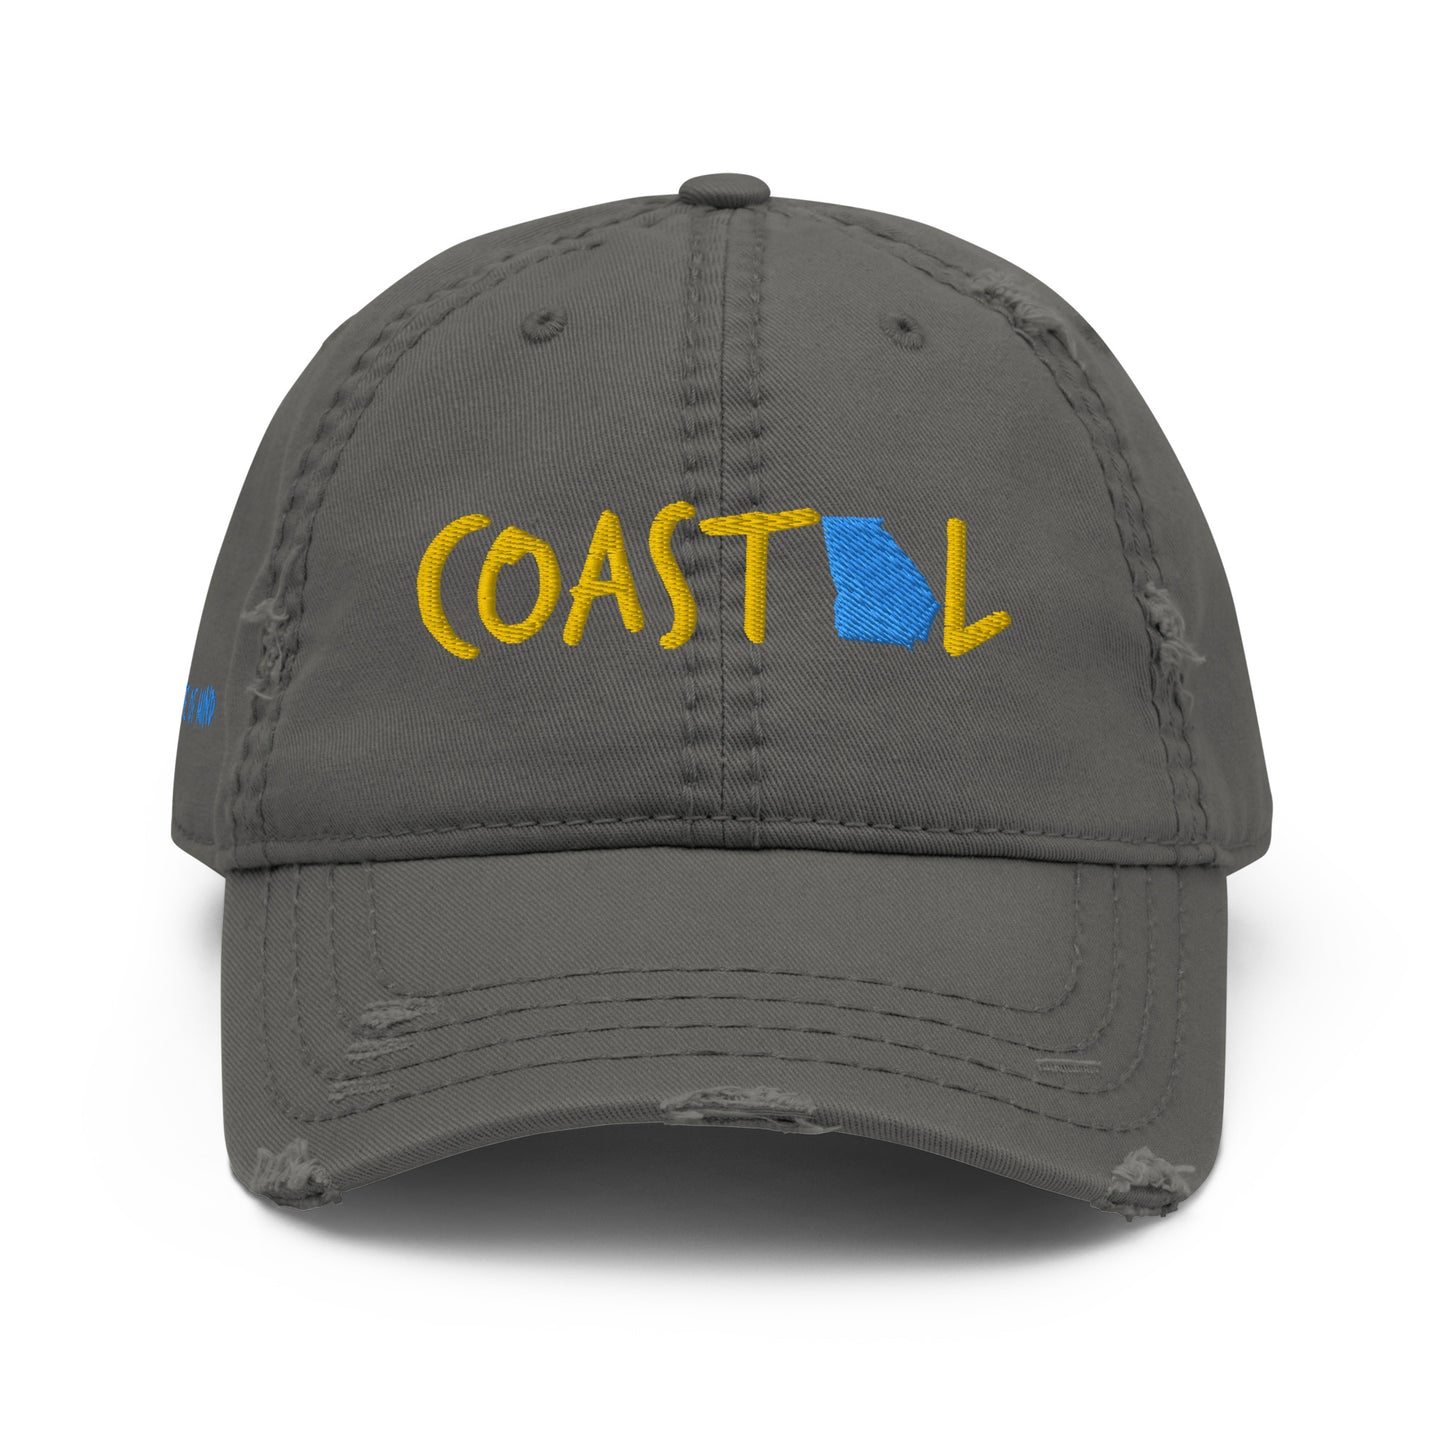 Coastal Georgia™ Distressed Dad Hat